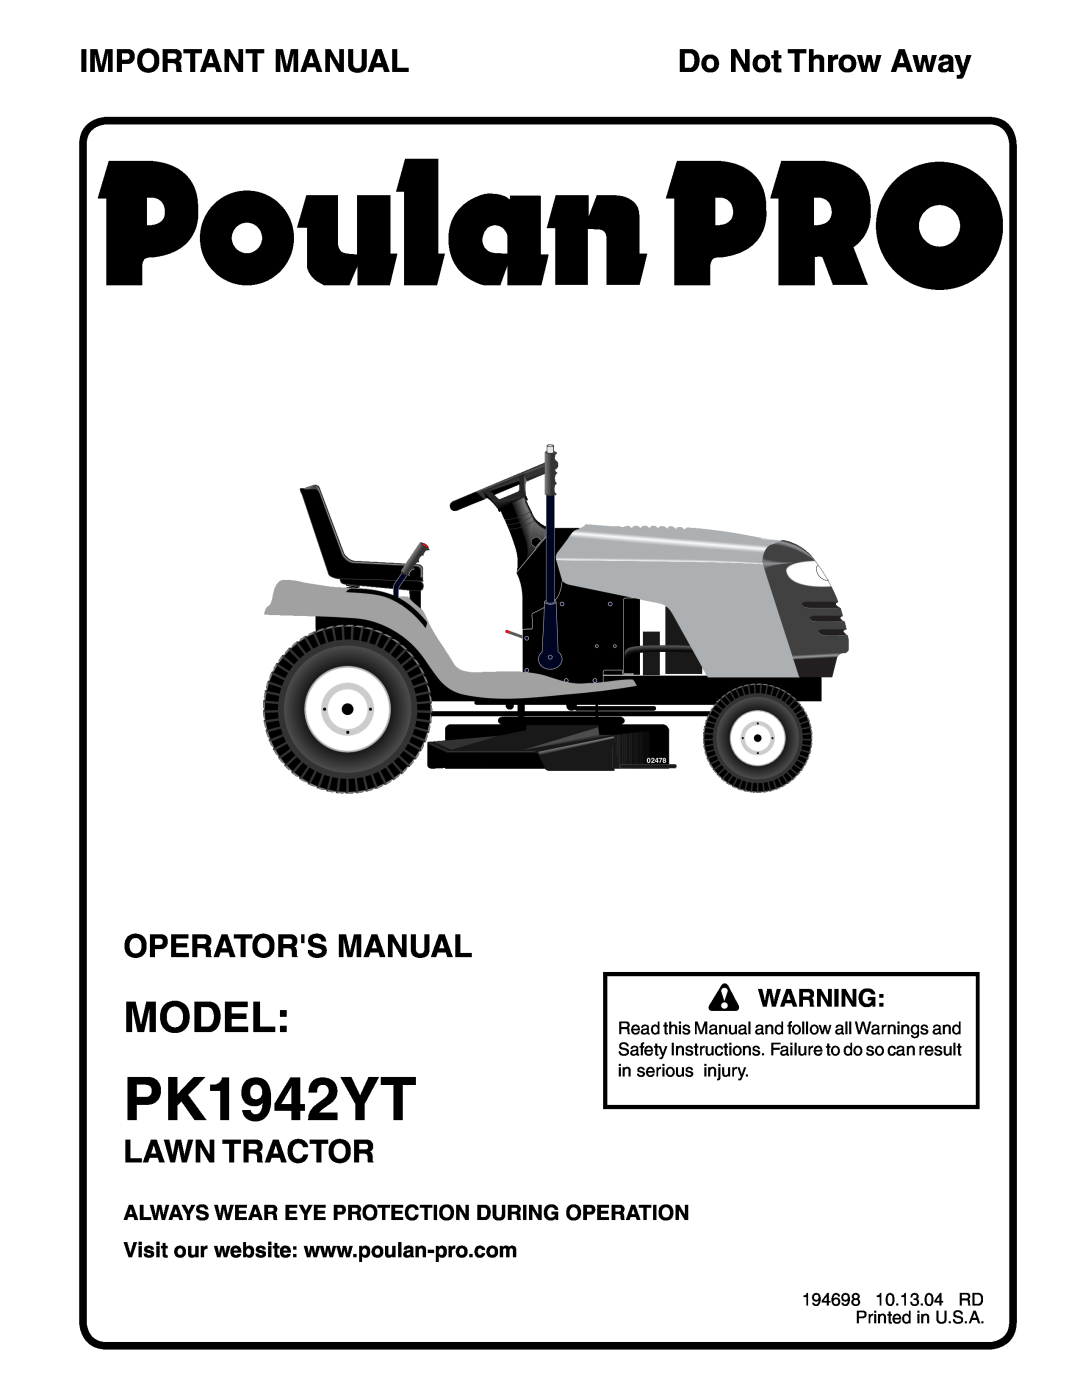 Poulan PK1942YT manual Model, Important Manual, Operators Manual, Lawn Tractor, Do Not Throw Away, 02478 